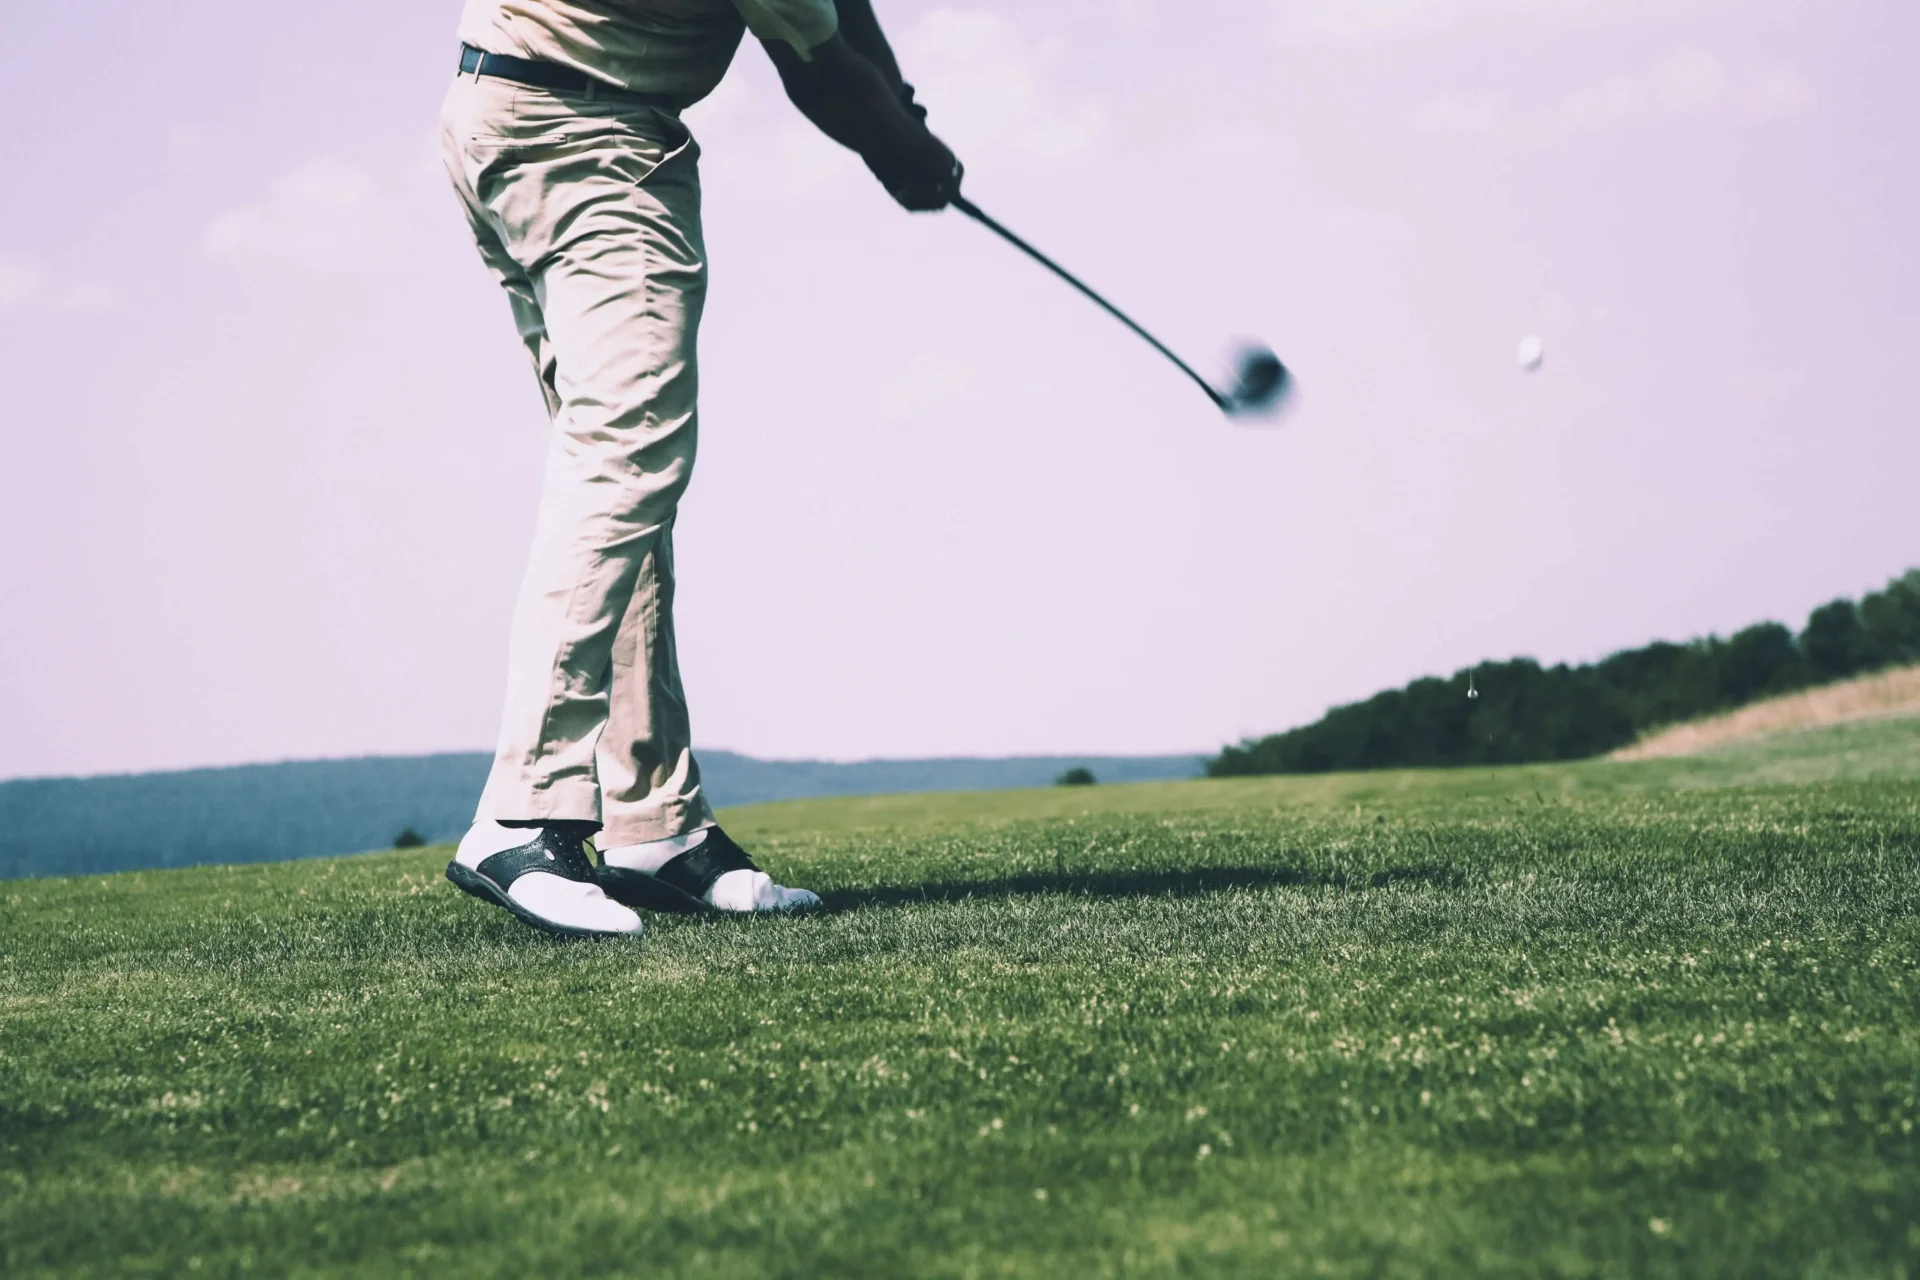 A man playing golf.